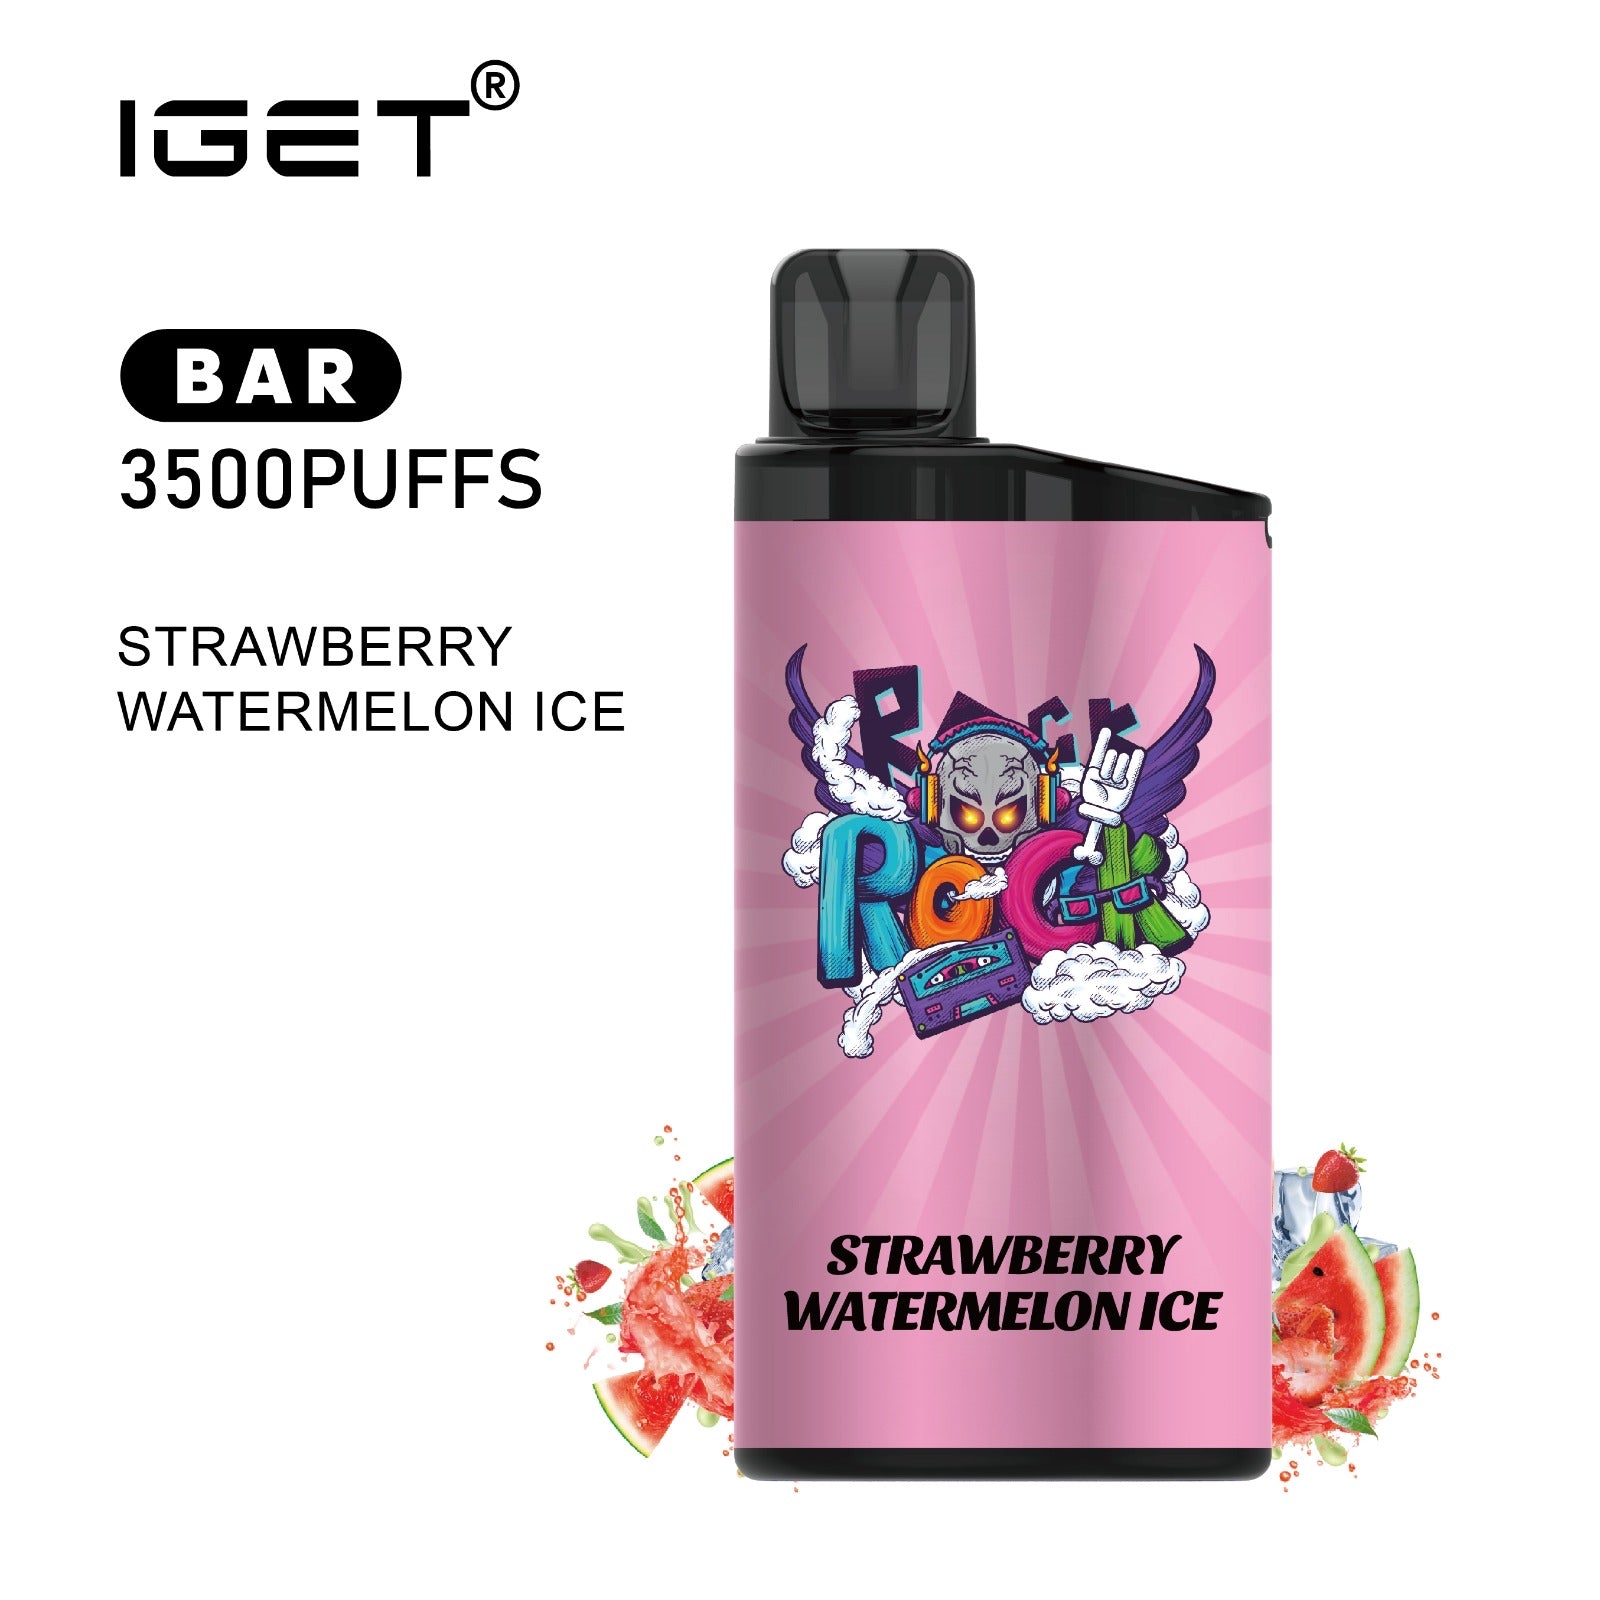 IGET BAR STRAWBERRY WATERMELON ICE 3500 PUFFS